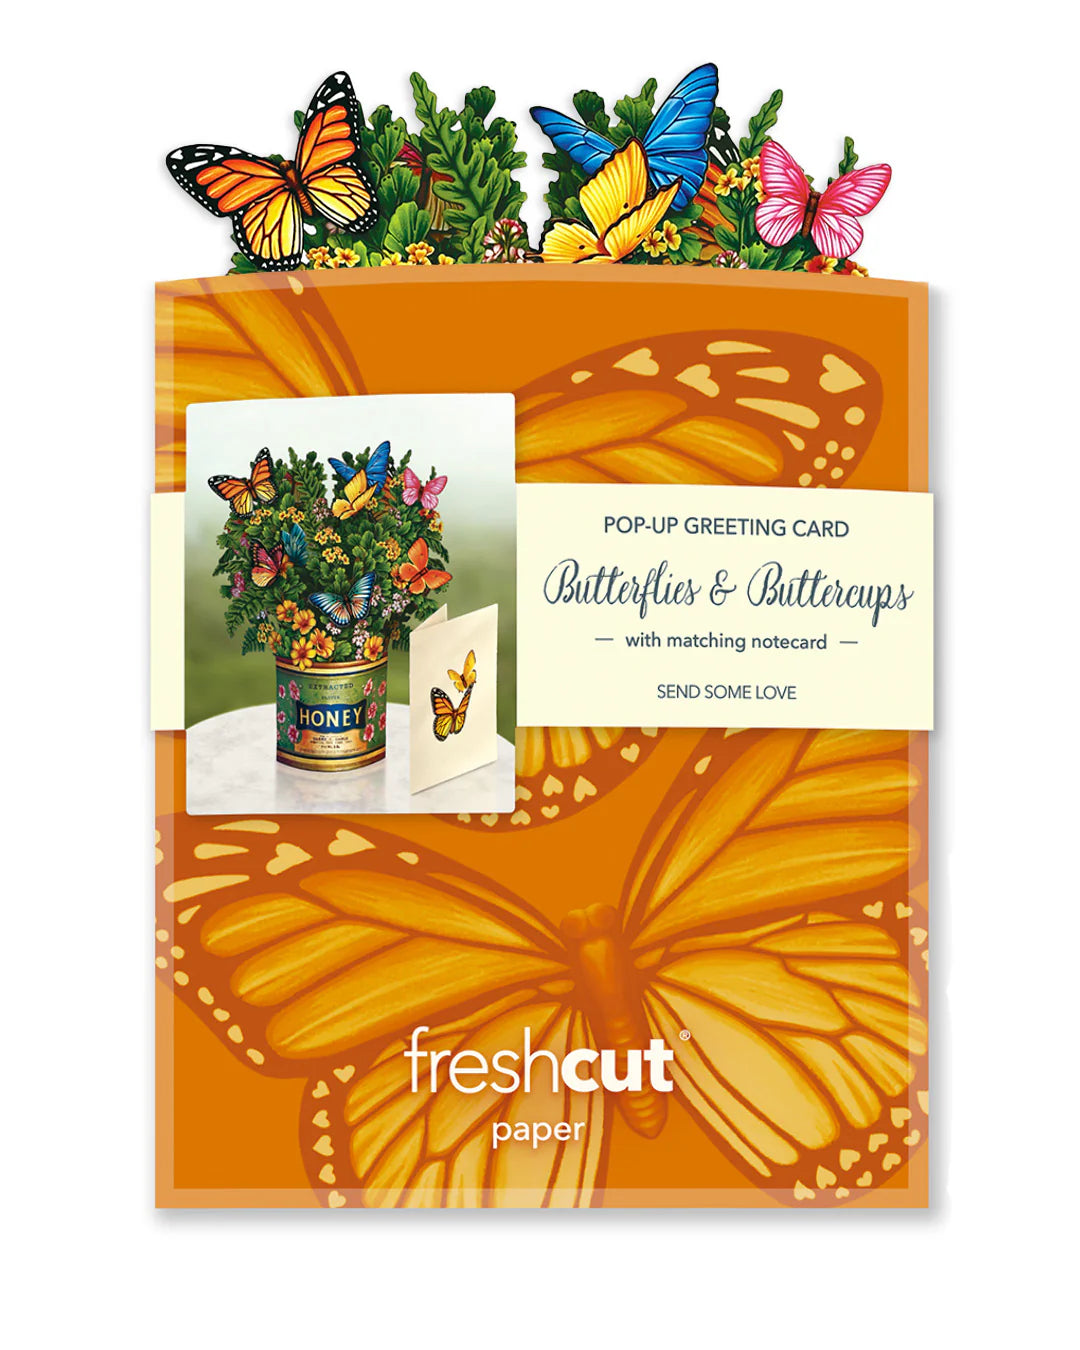 Butterflies & Buttercups pop up bouquet in its mailing envelope.